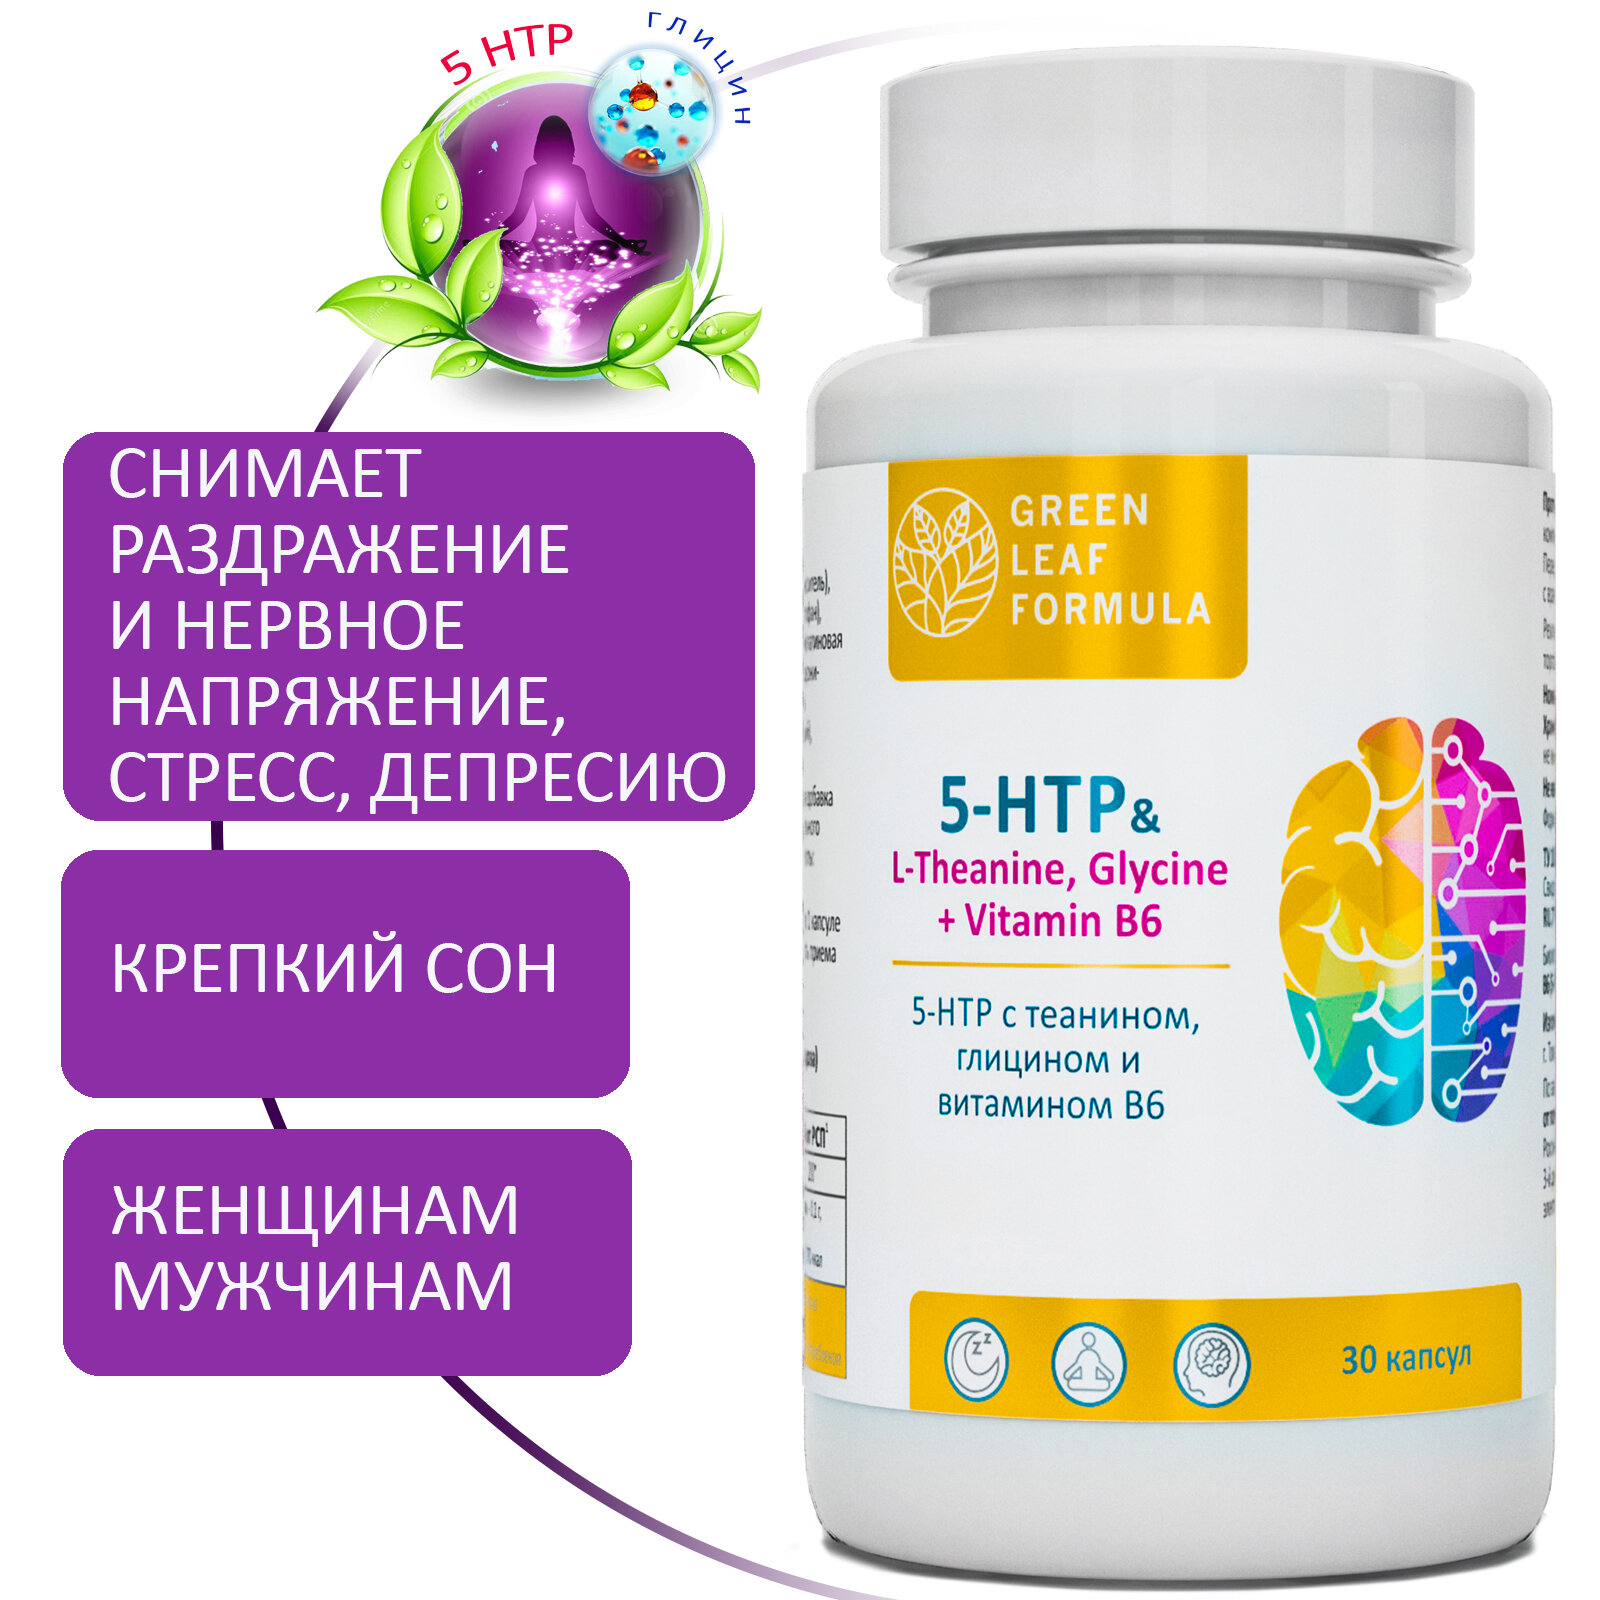 5 HTP 100 мг (5 НТР, 5-гидрокситриптофан) и глицин, от стресса и депрессии таблетки, антидепрессант, витамины для нервной системы, таблетки для сна